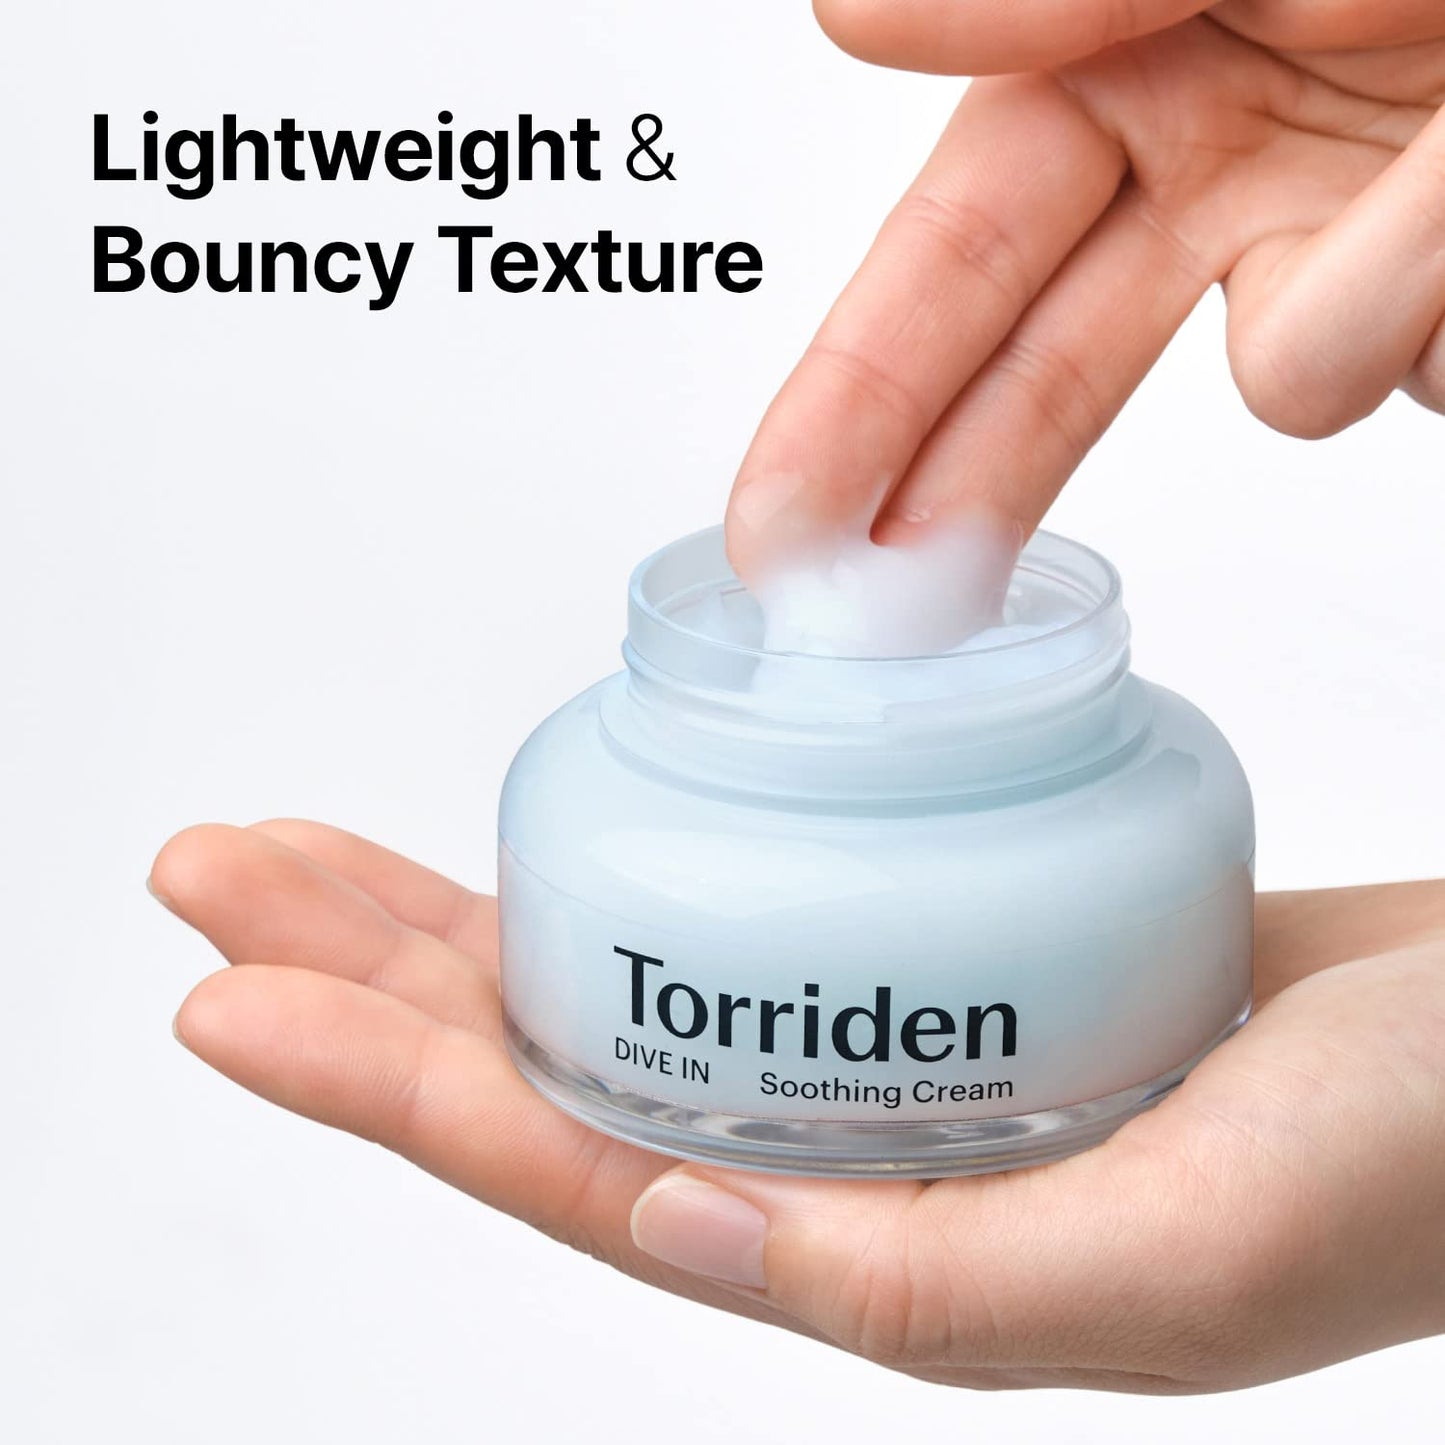 Torriden DIVE-IN Low-Molecular Hyaluronic acid Soothing Cream 3.38 fl oz